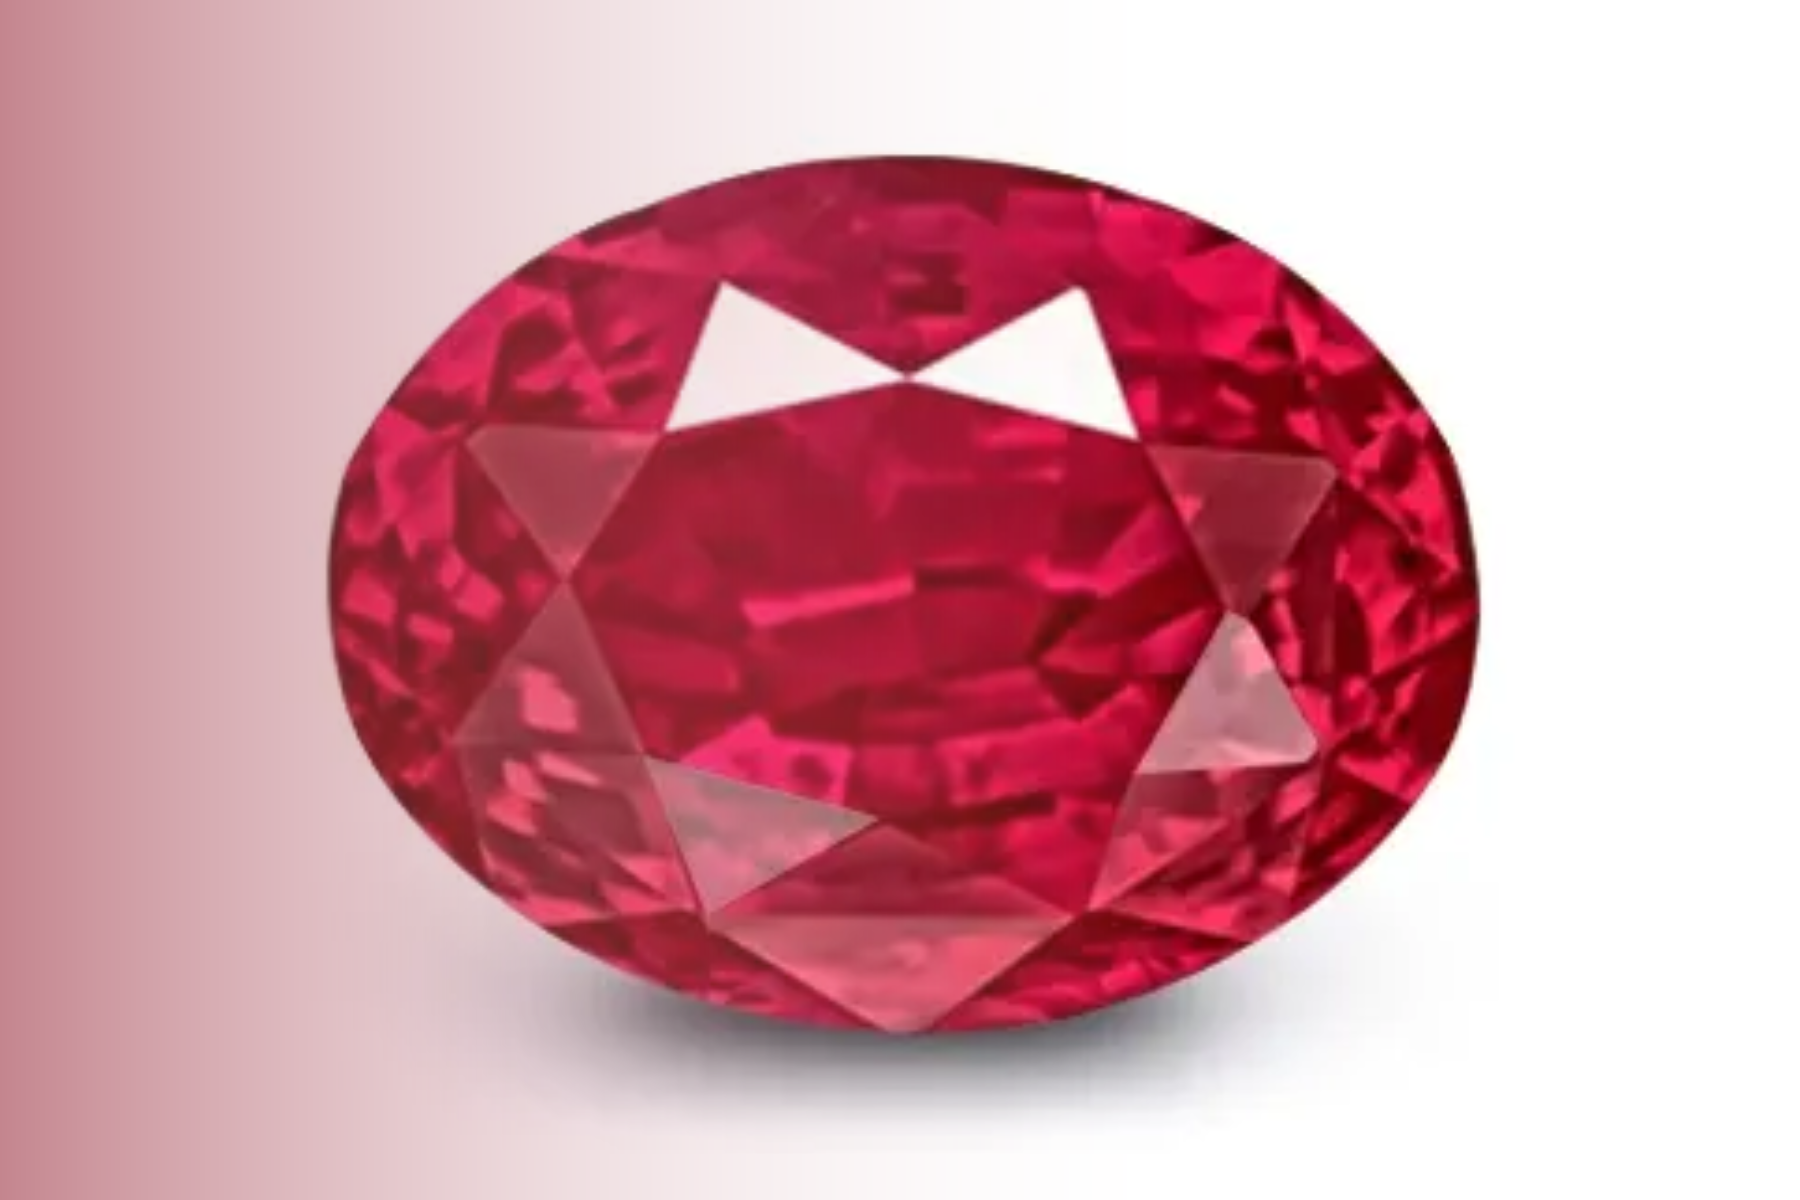 Oblong ruby crystal